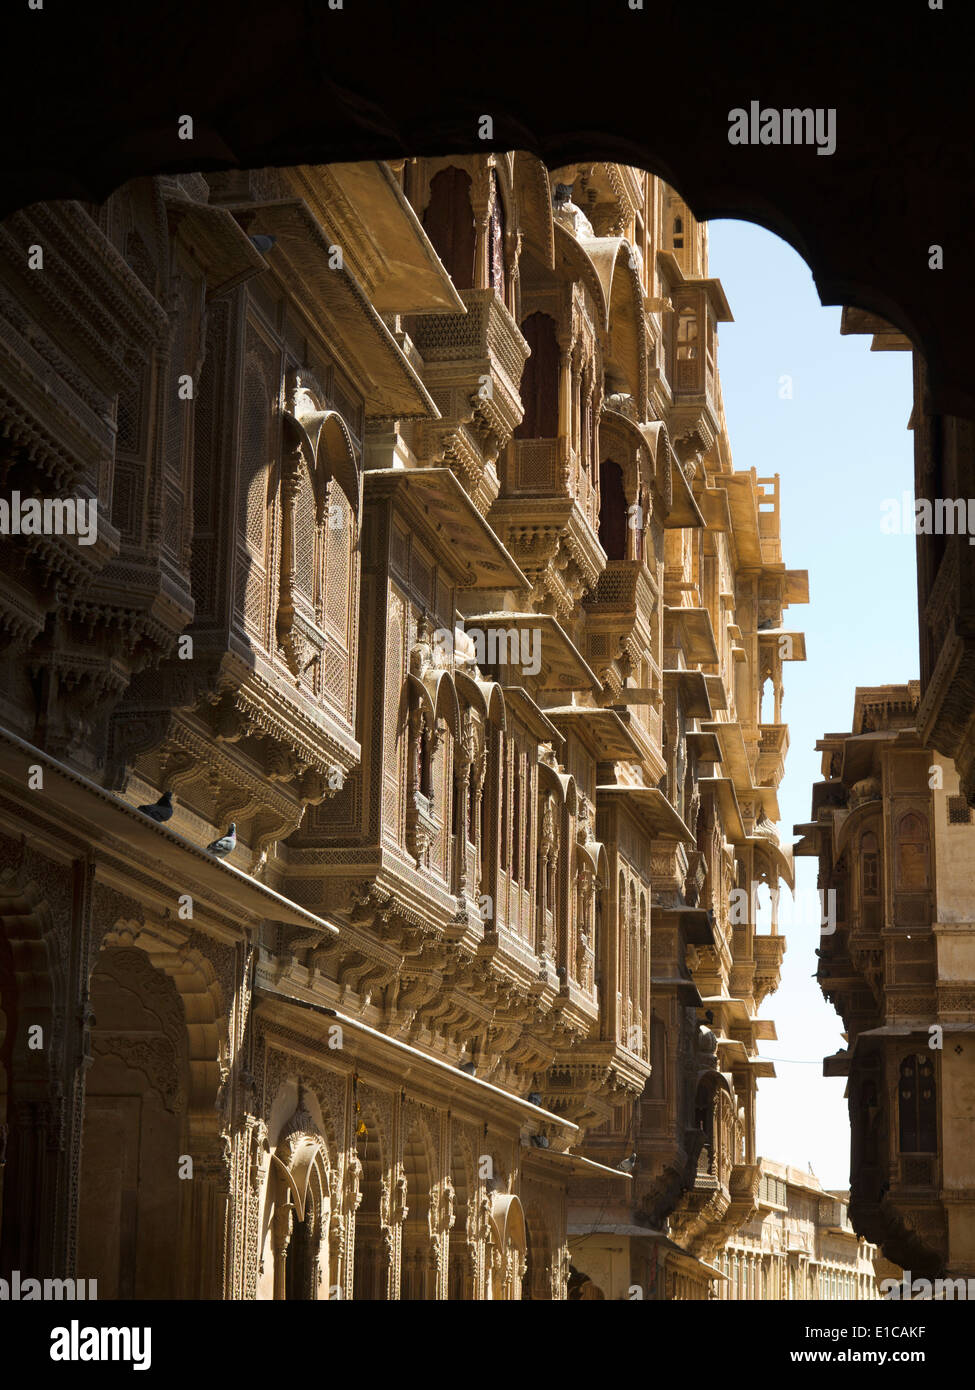 India, Rajasthan, Jaisalmer, Patwon Ki Haveli, ornately decorated historic former merchant’s house Stock Photo